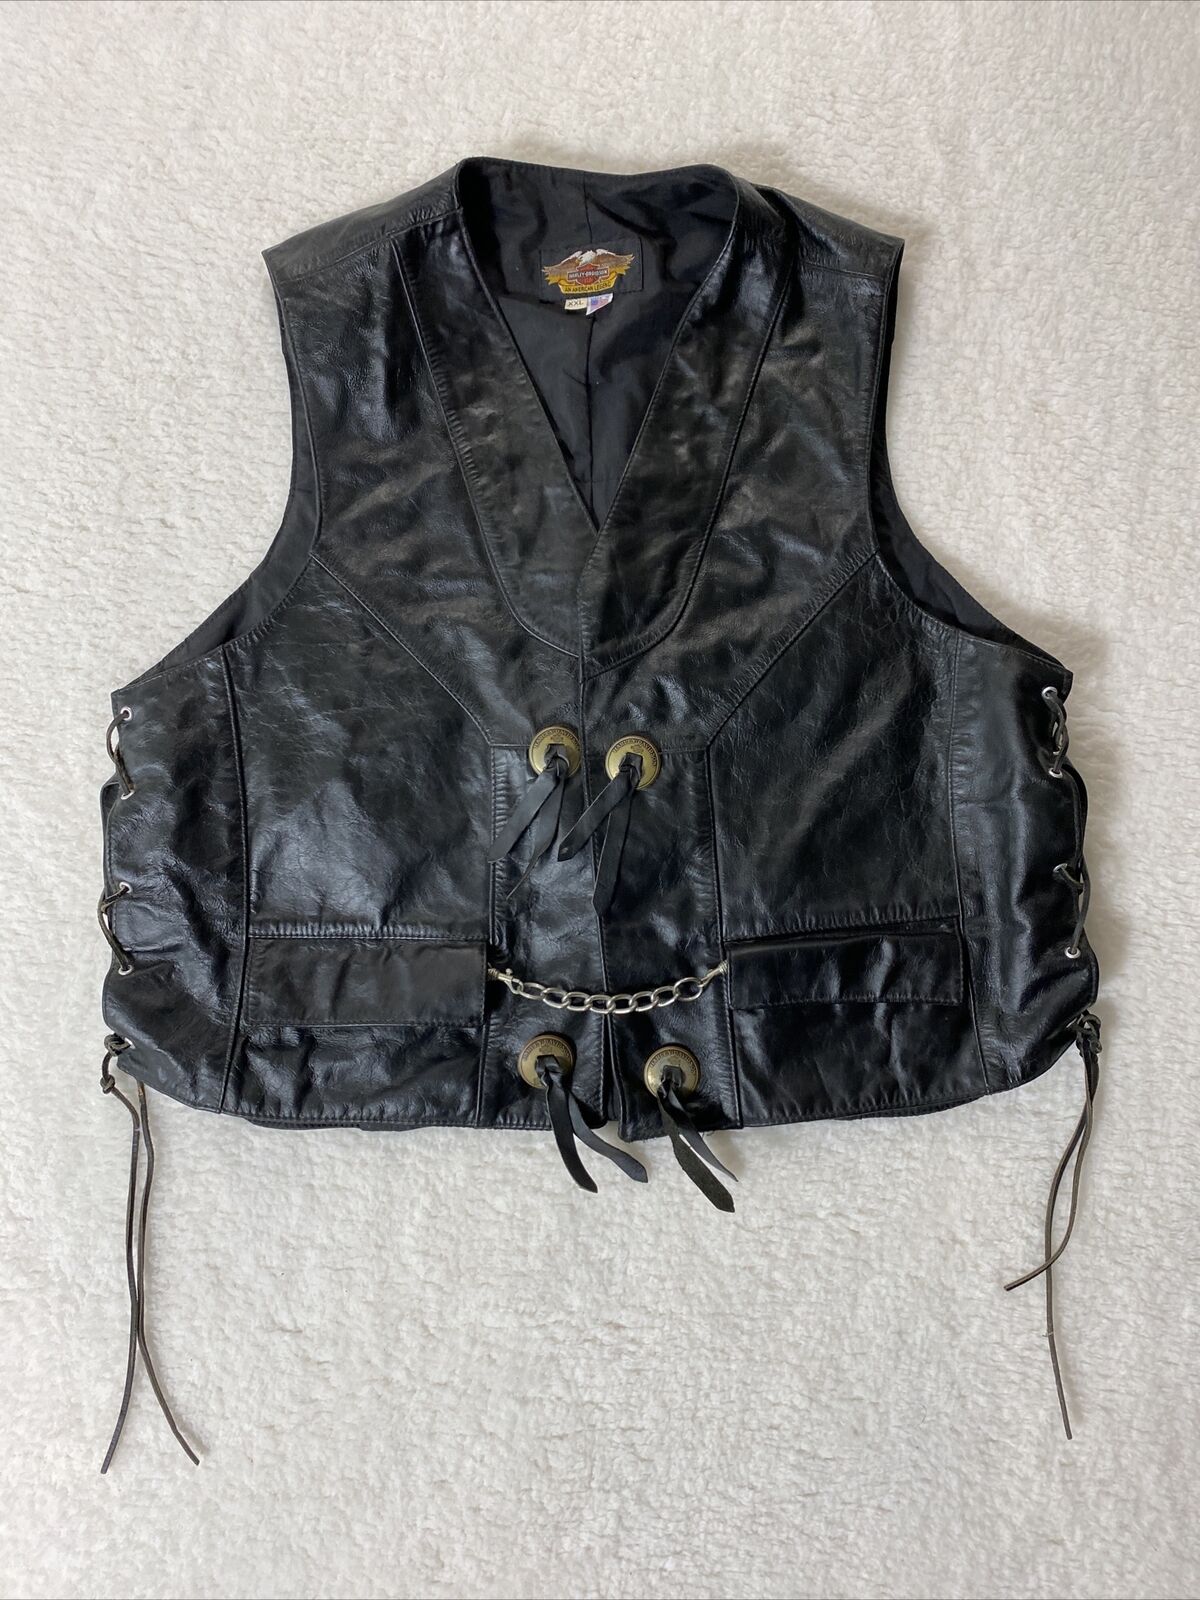 VTG Harley Davidson Leather Vest Lace Up Concho HOG Owners Rocky MT USA Made XXL